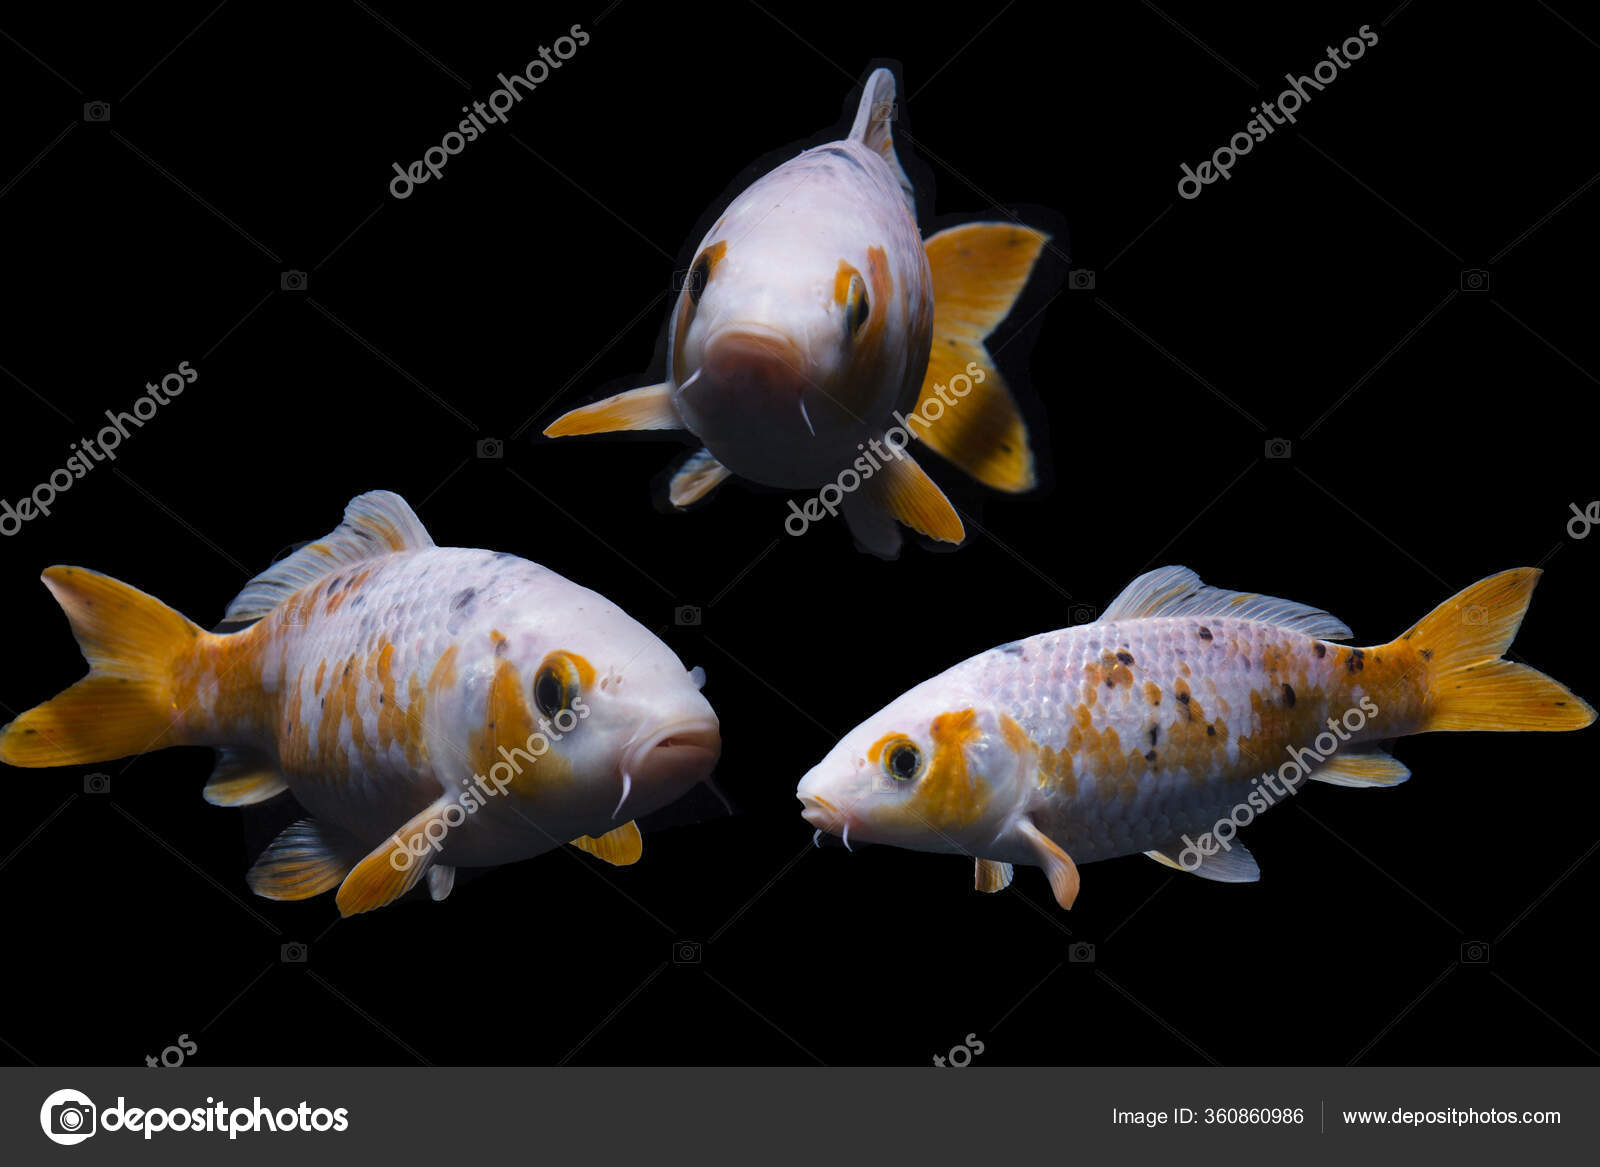 Beautiful fish Stock Photos, Royalty Free Beautiful fish Images ...